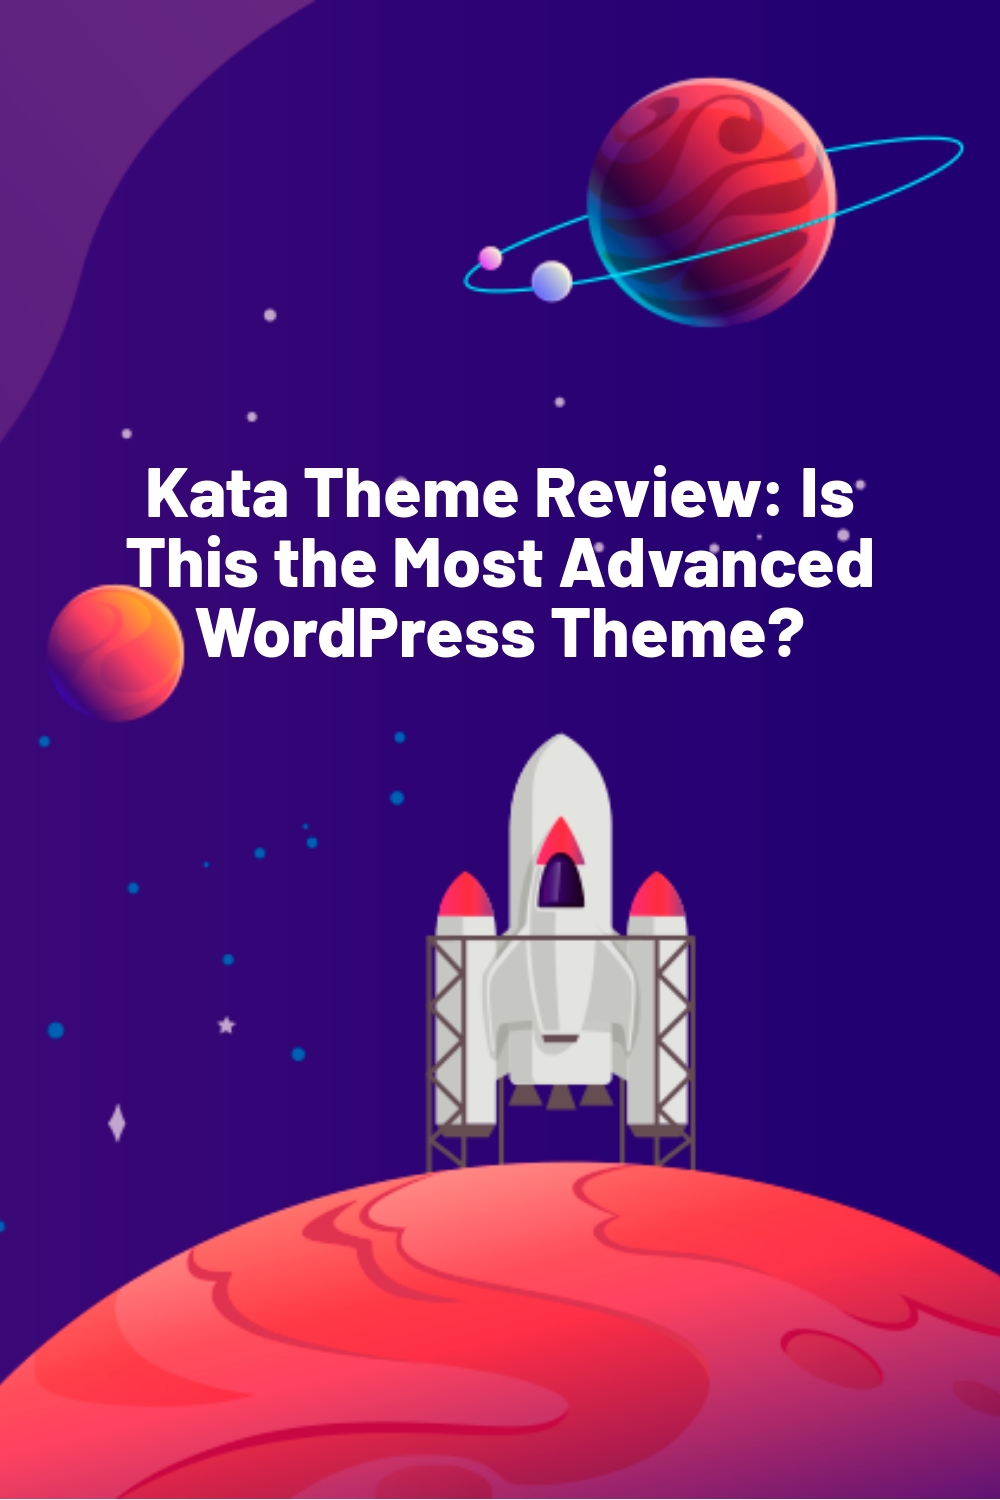 Kata Theme Review:  Is This the Most Advanced WordPress Theme?